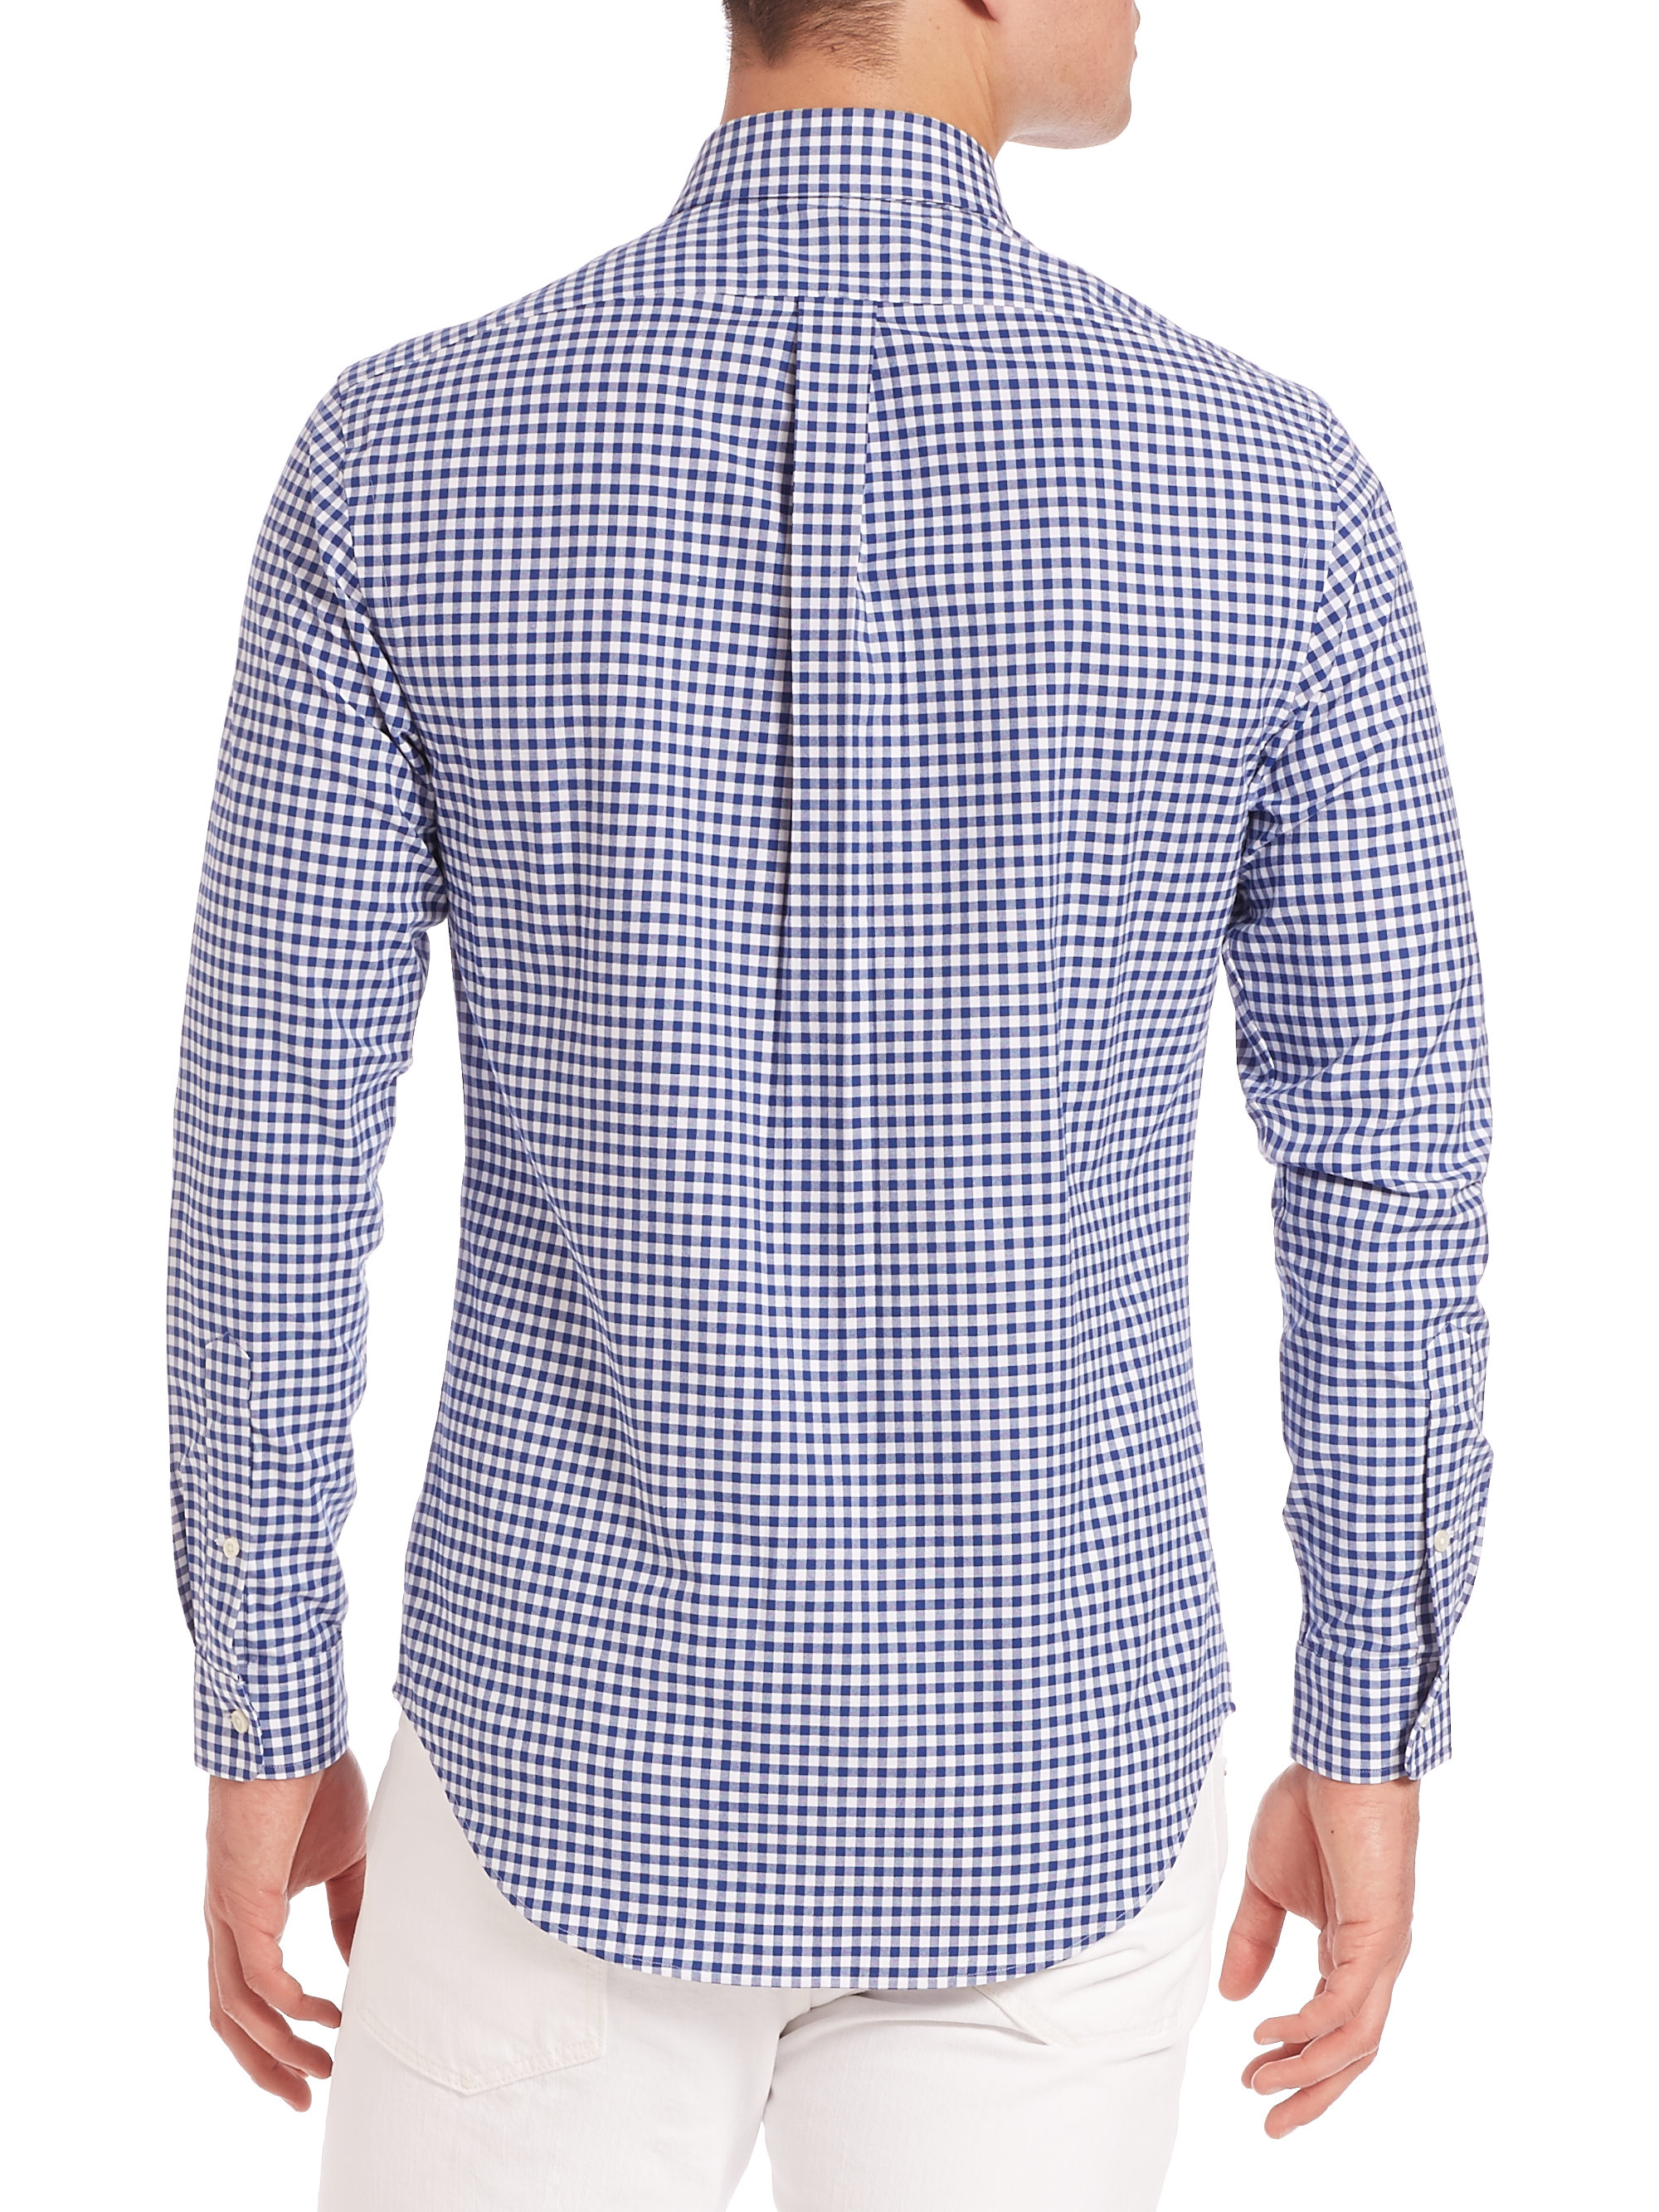 Polo Ralph Lauren Slim-fit Gingham Oxford Shirt in Blue for Men - Lyst